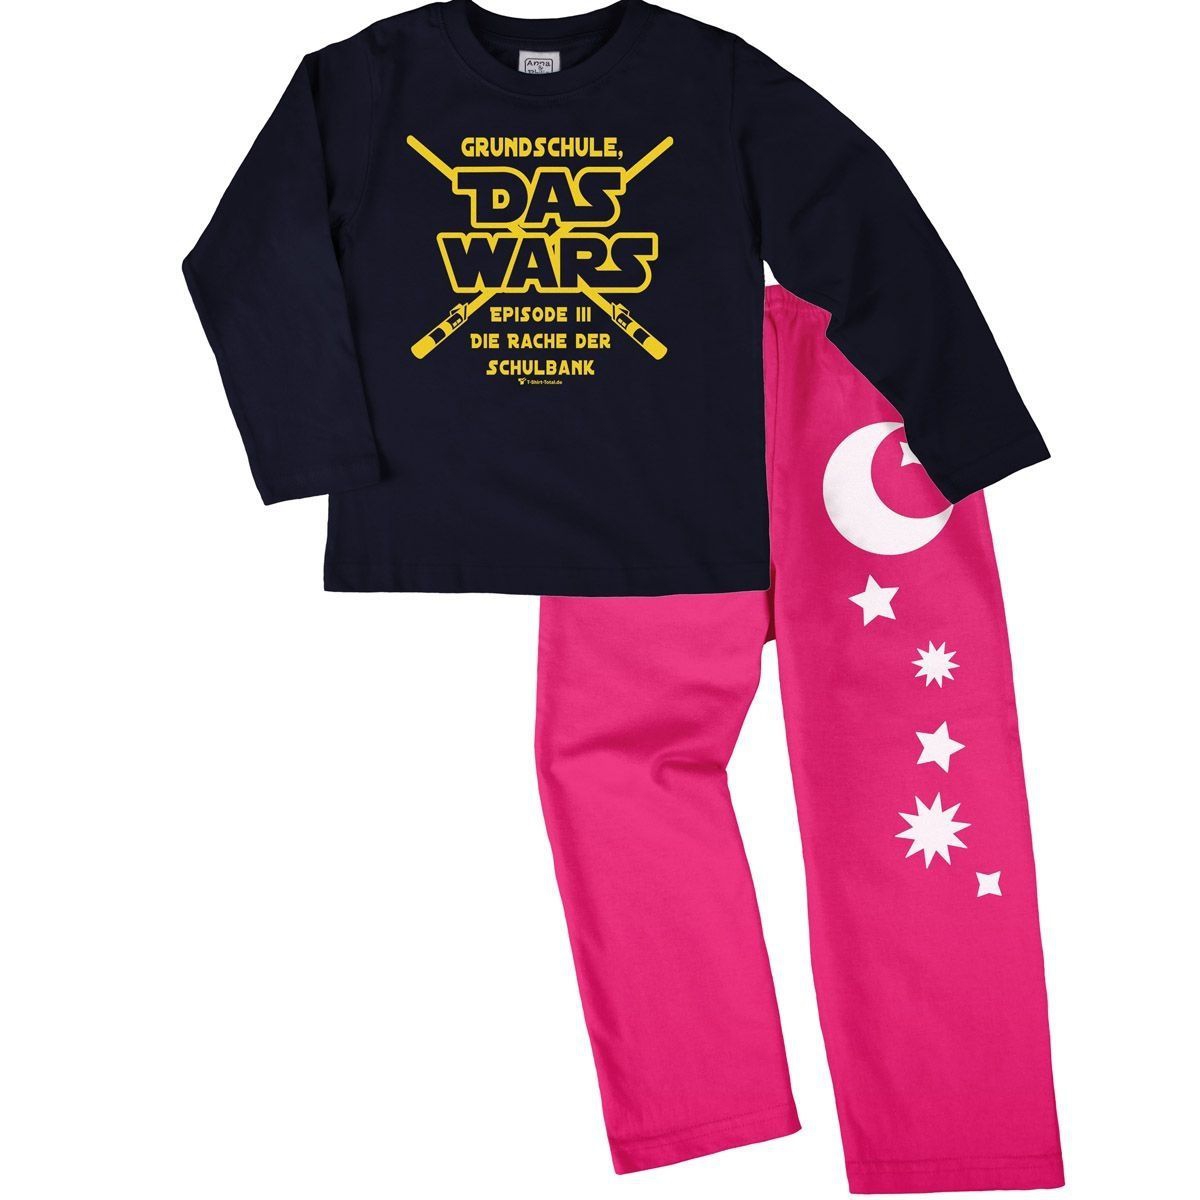 Das wars Grundschule Pyjama Set navy / pink 134 / 140